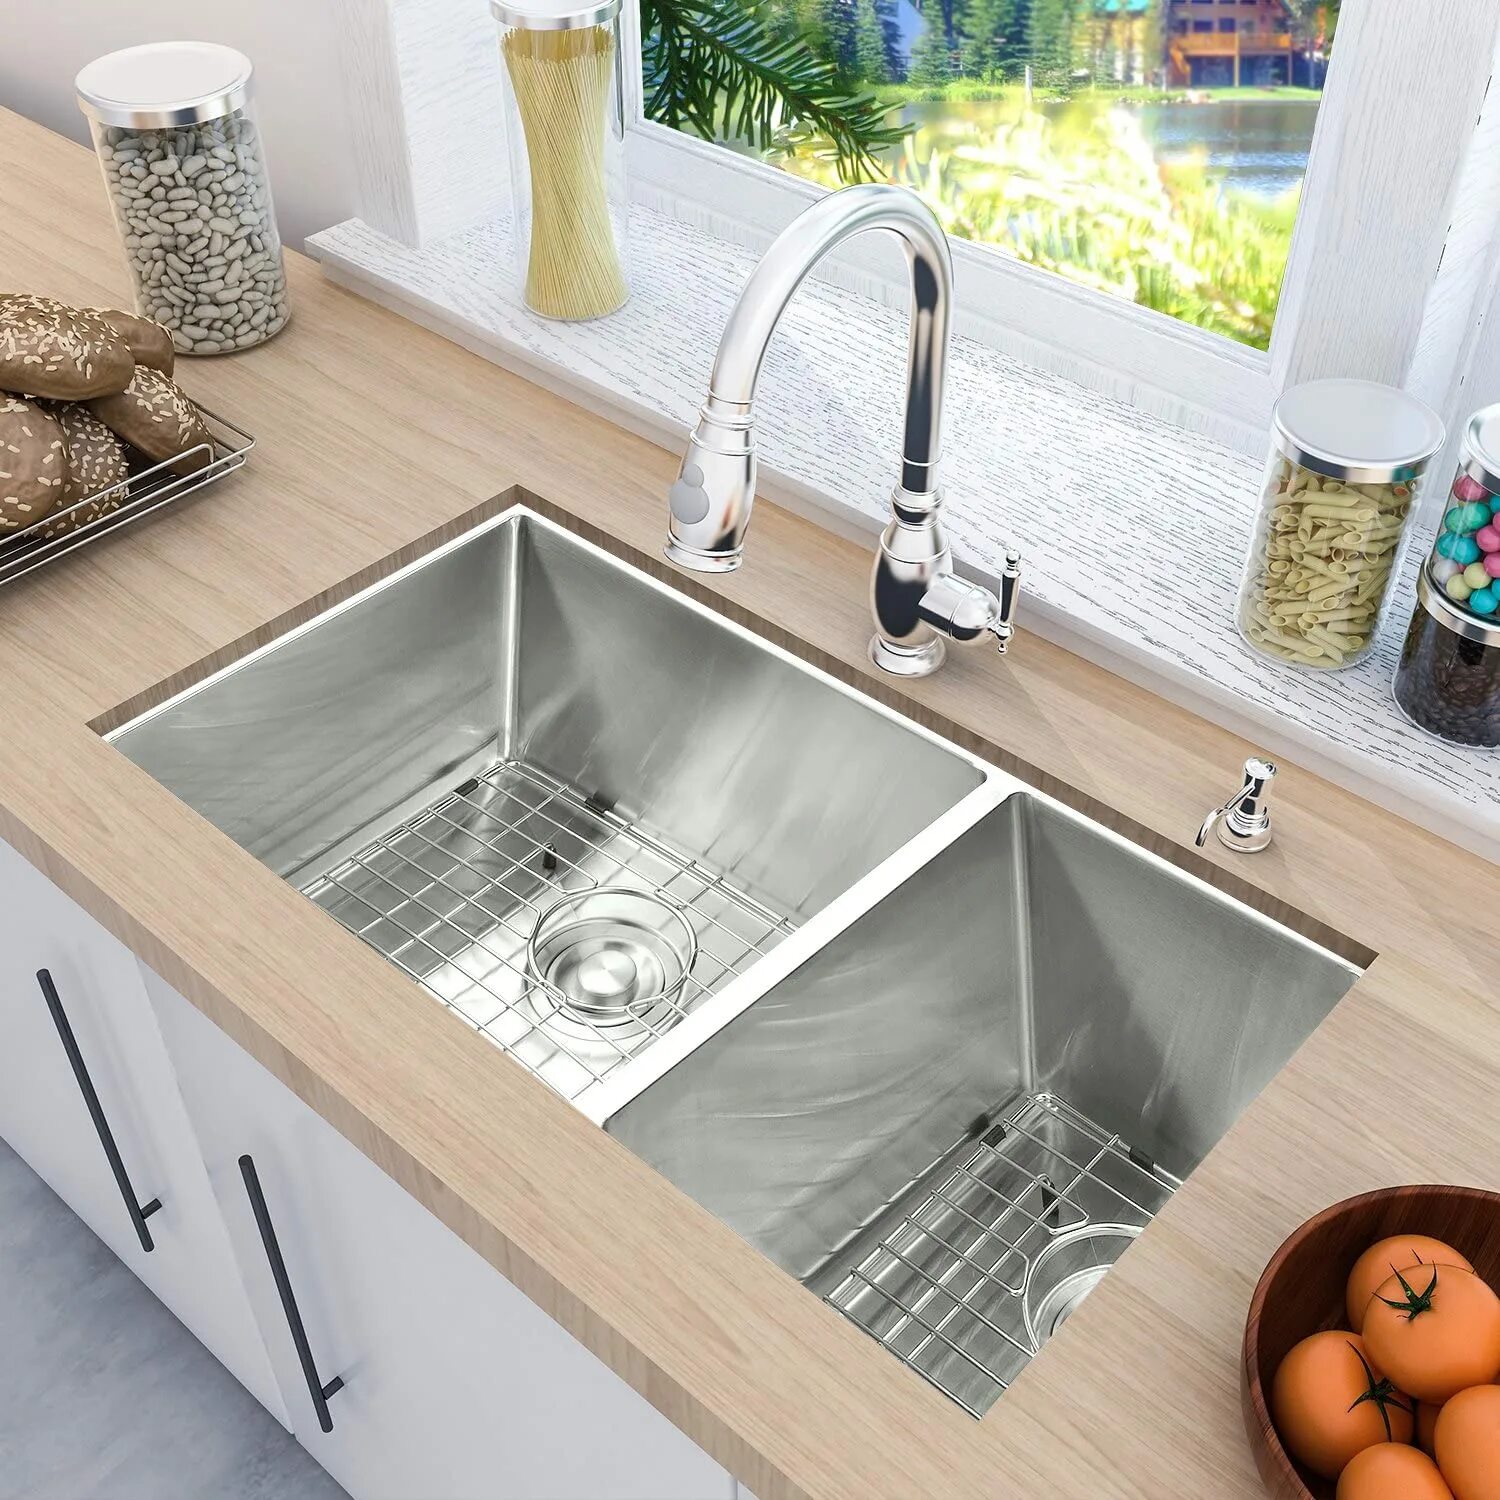 Мойка для мытья посуды. Мойка Double Bowl Sink 632392r1 White Alpin. Раковина Kitchen Sink кухонная. Раковина Stainless Sink кухонная Xiaomi. Kitchen Sink мойка Acidem.